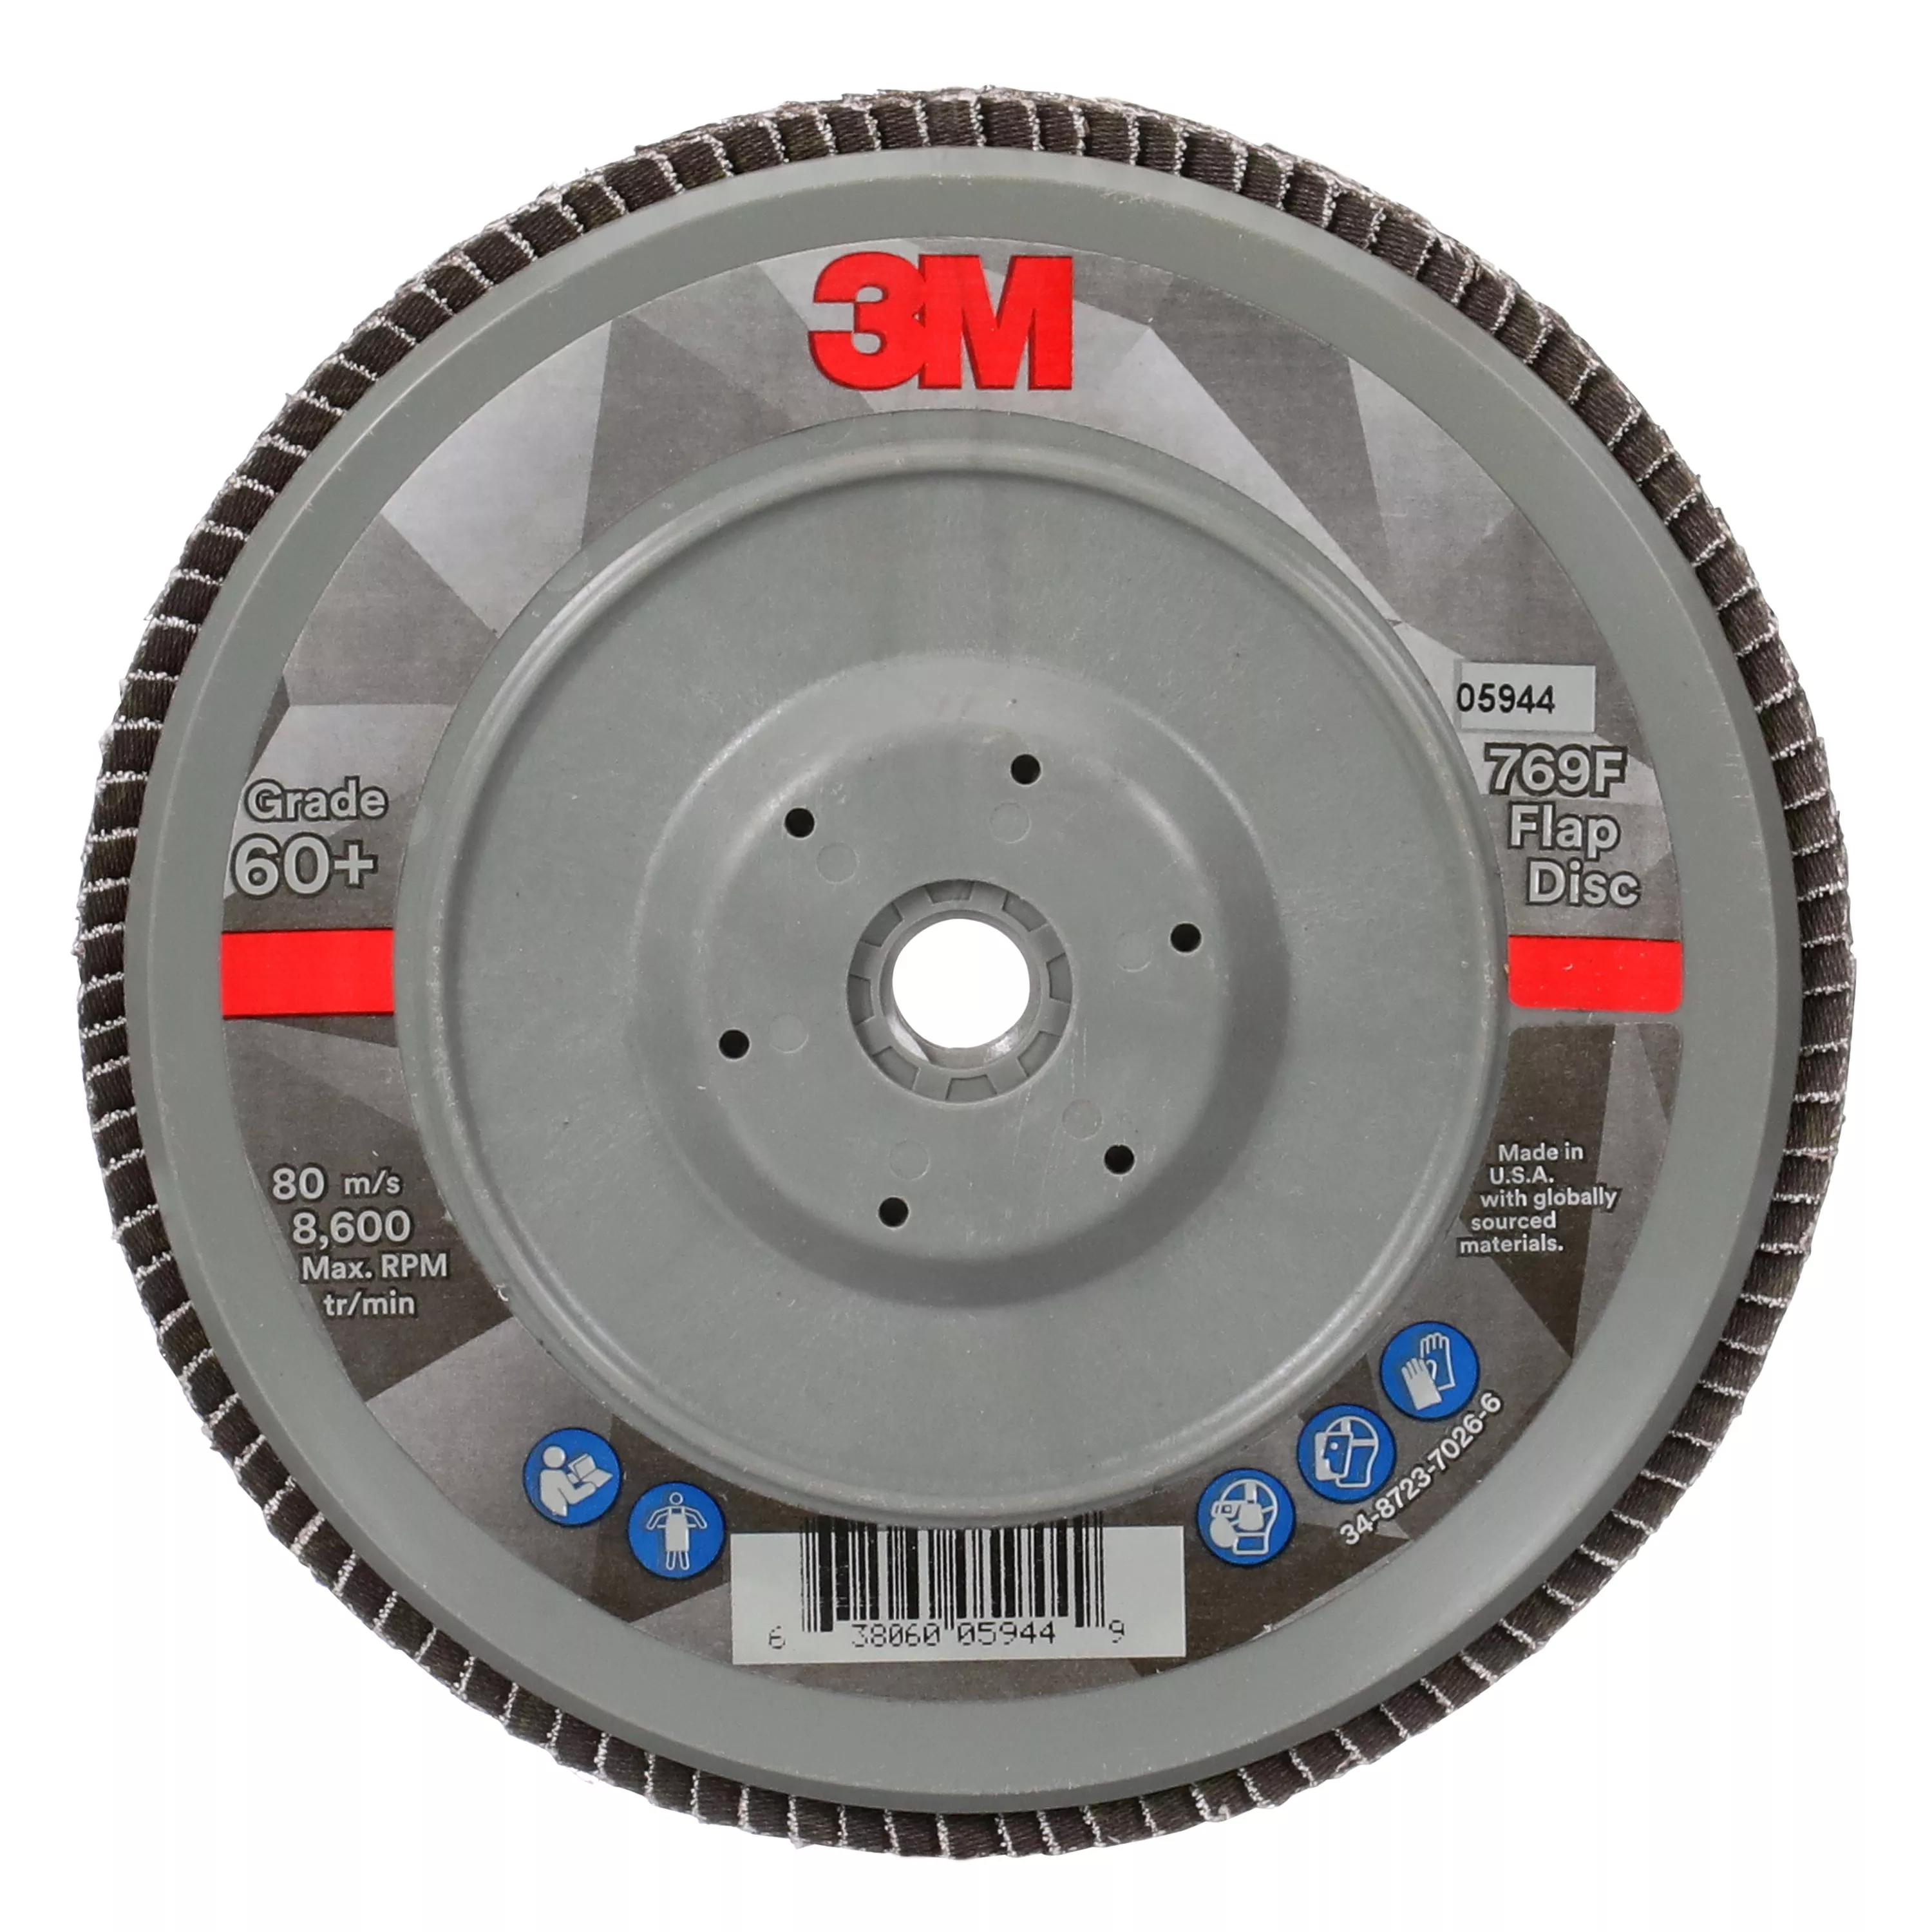 SKU 7100177902 | 3M™ Flap Disc 769F